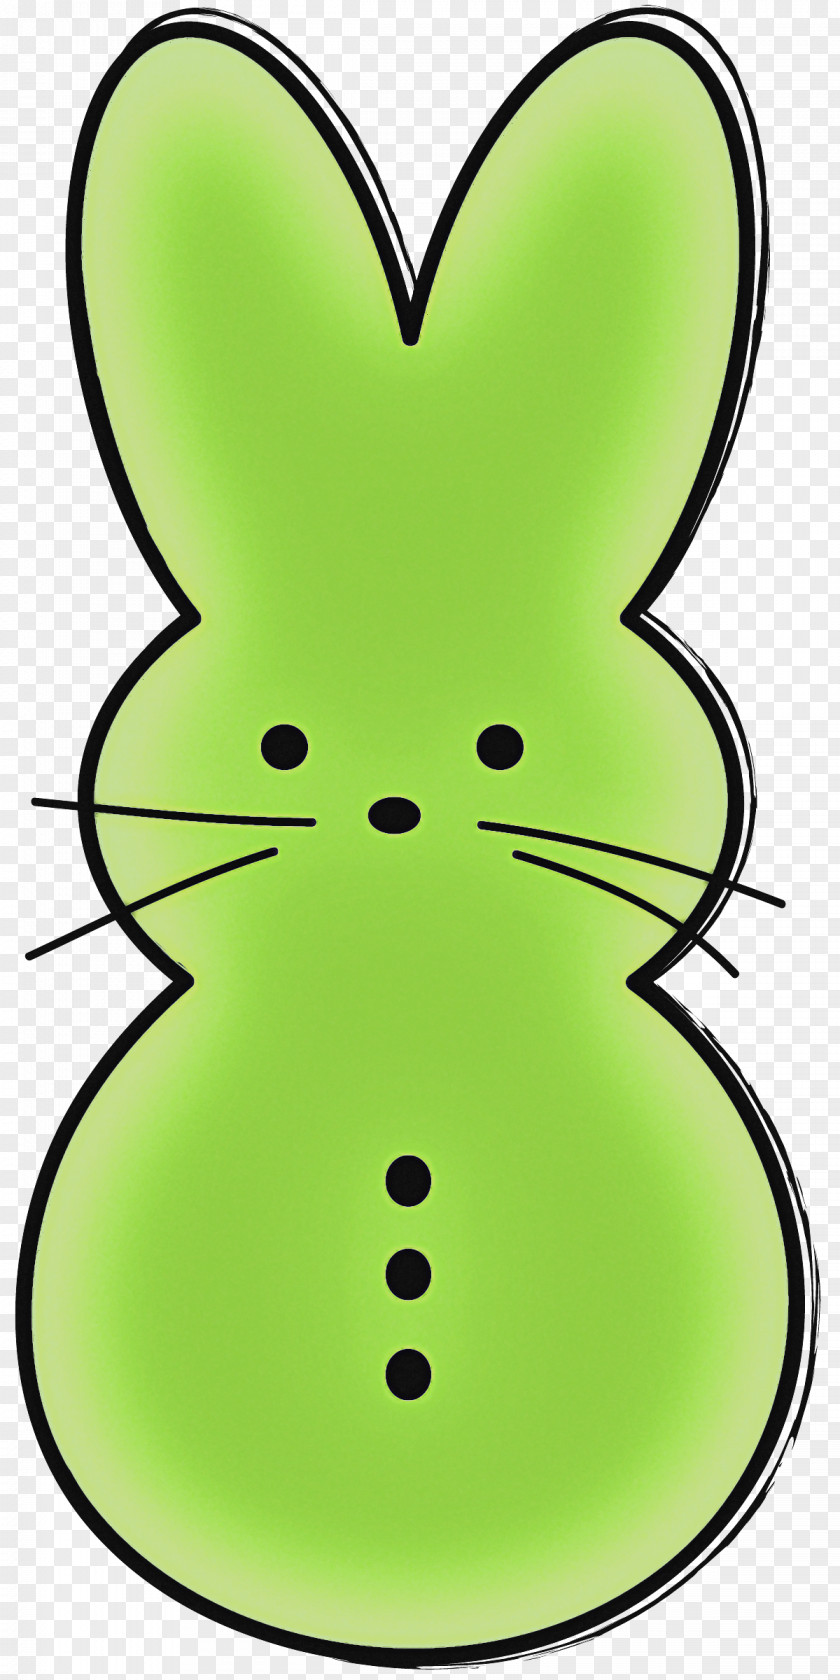 Green Cartoon Rabbits And Hares Rabbit Whiskers PNG